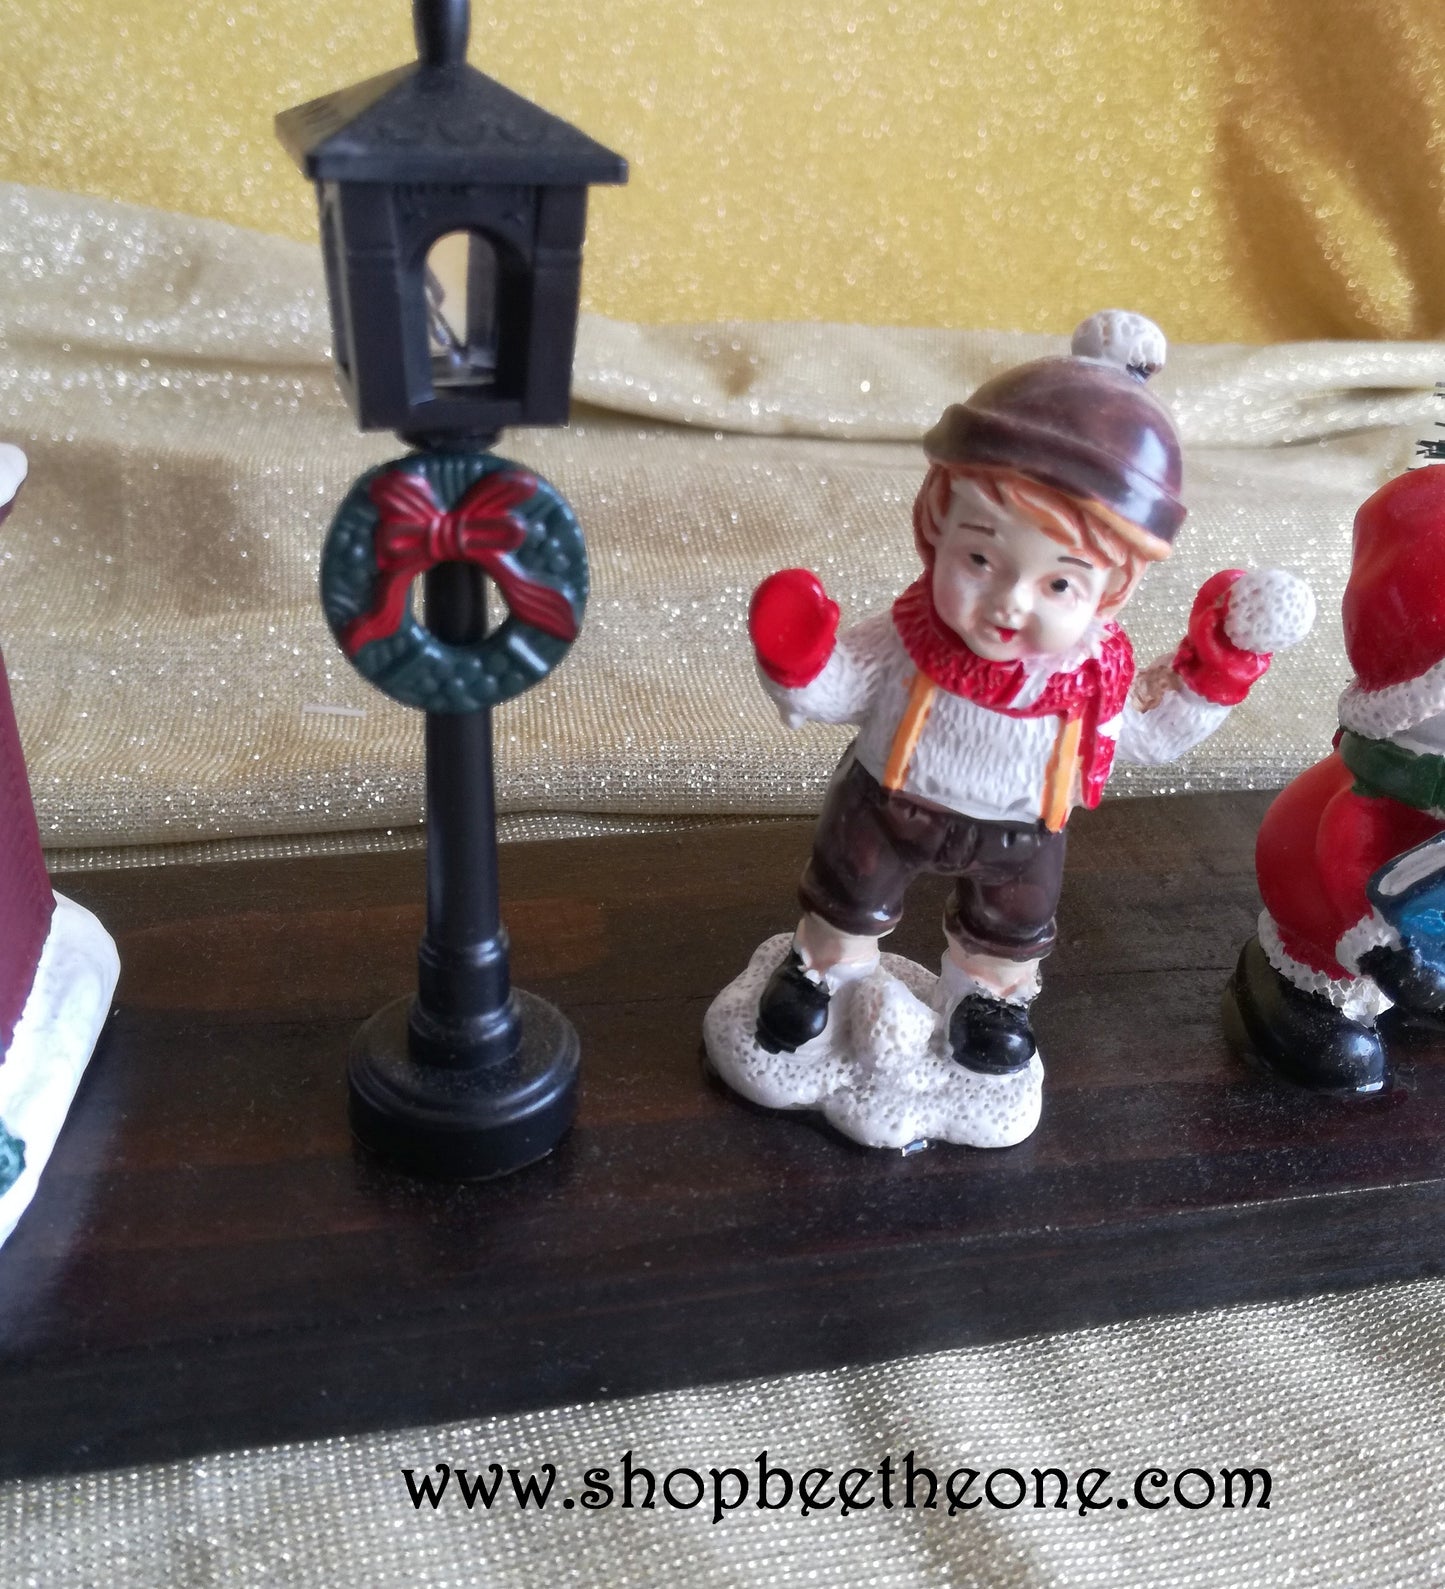 Grand panneau de bois "Village de Noël" avec figurines lumineuses- Surcyclage/Upcycling - Marque Zambara